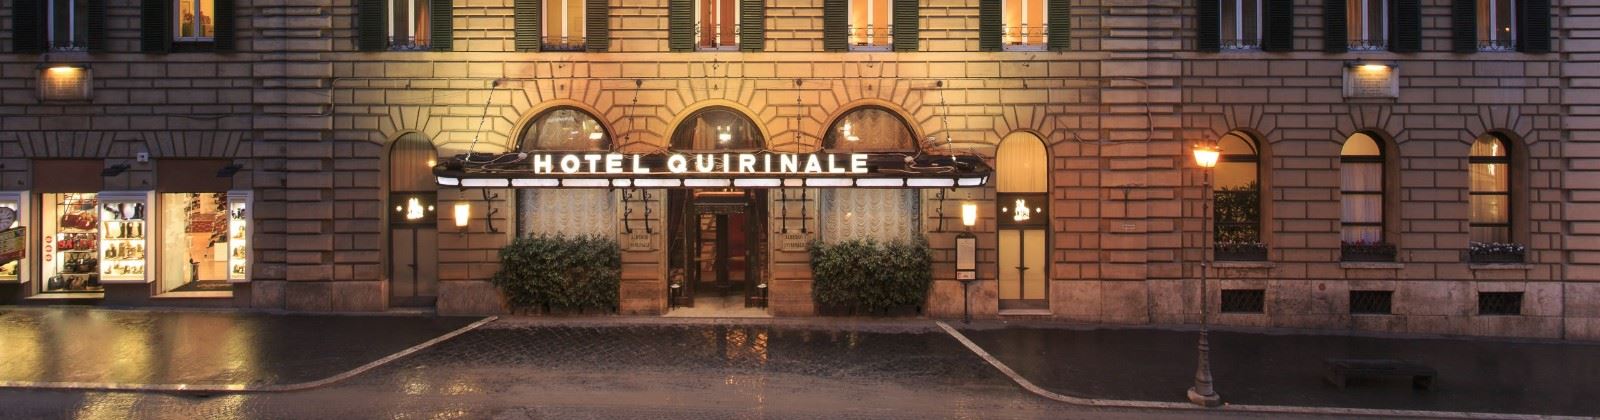 OLEVENE image - hotel-quirinale-rome-olevene-